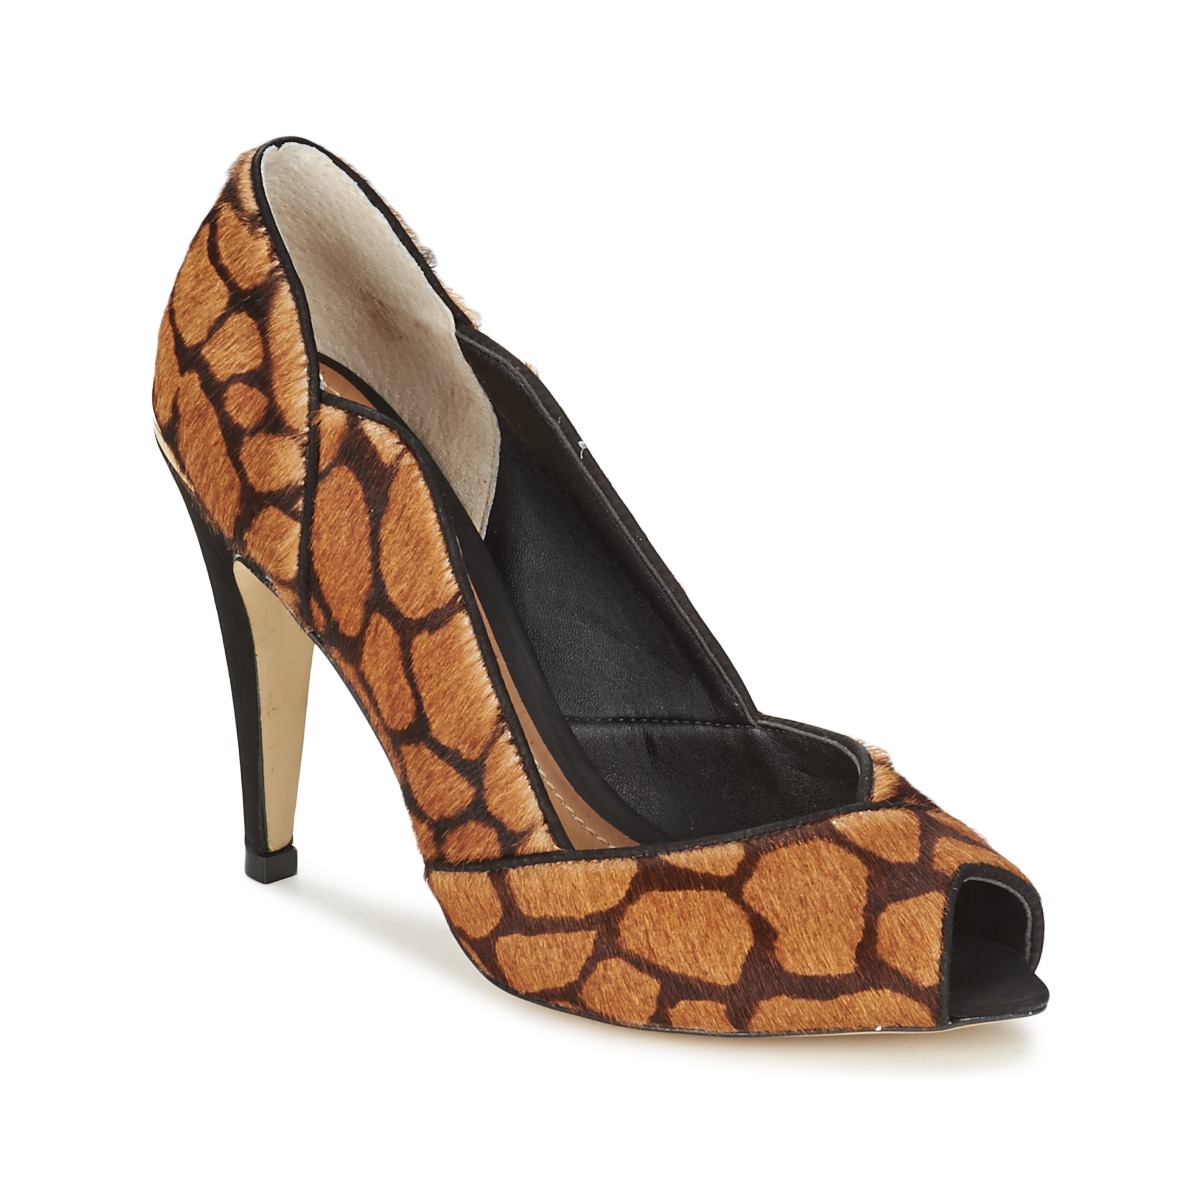 Schuhe Damen Pumps Dumond GUATIL Leopard